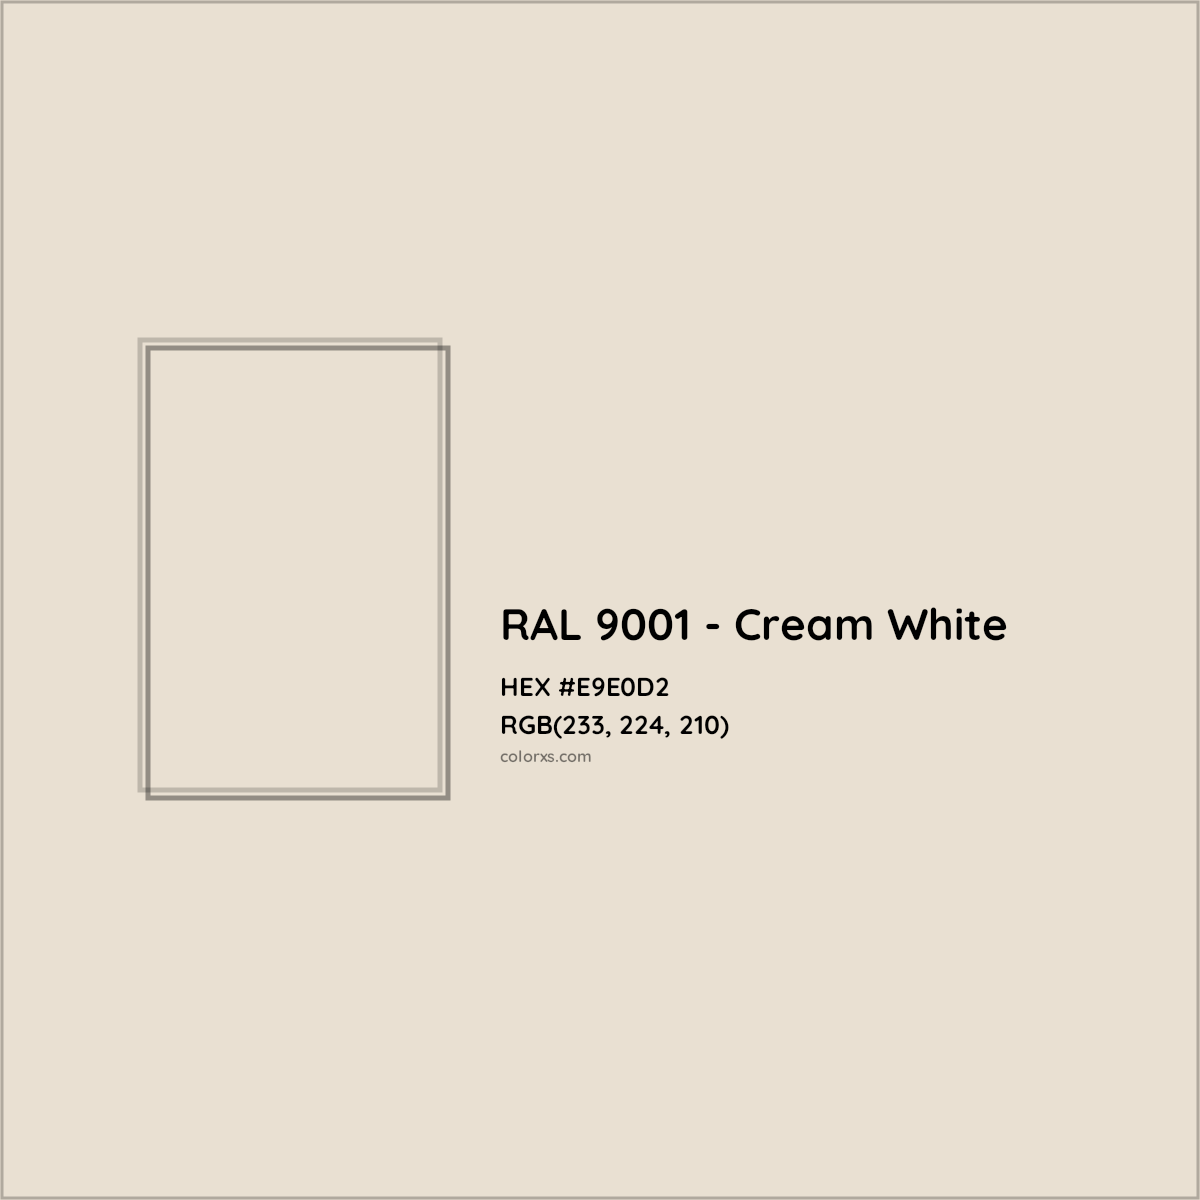 tijdelijk nooit ophouden About RAL 9001 - Cream White Color - Color codes, similar colors and paints  - colorxs.com